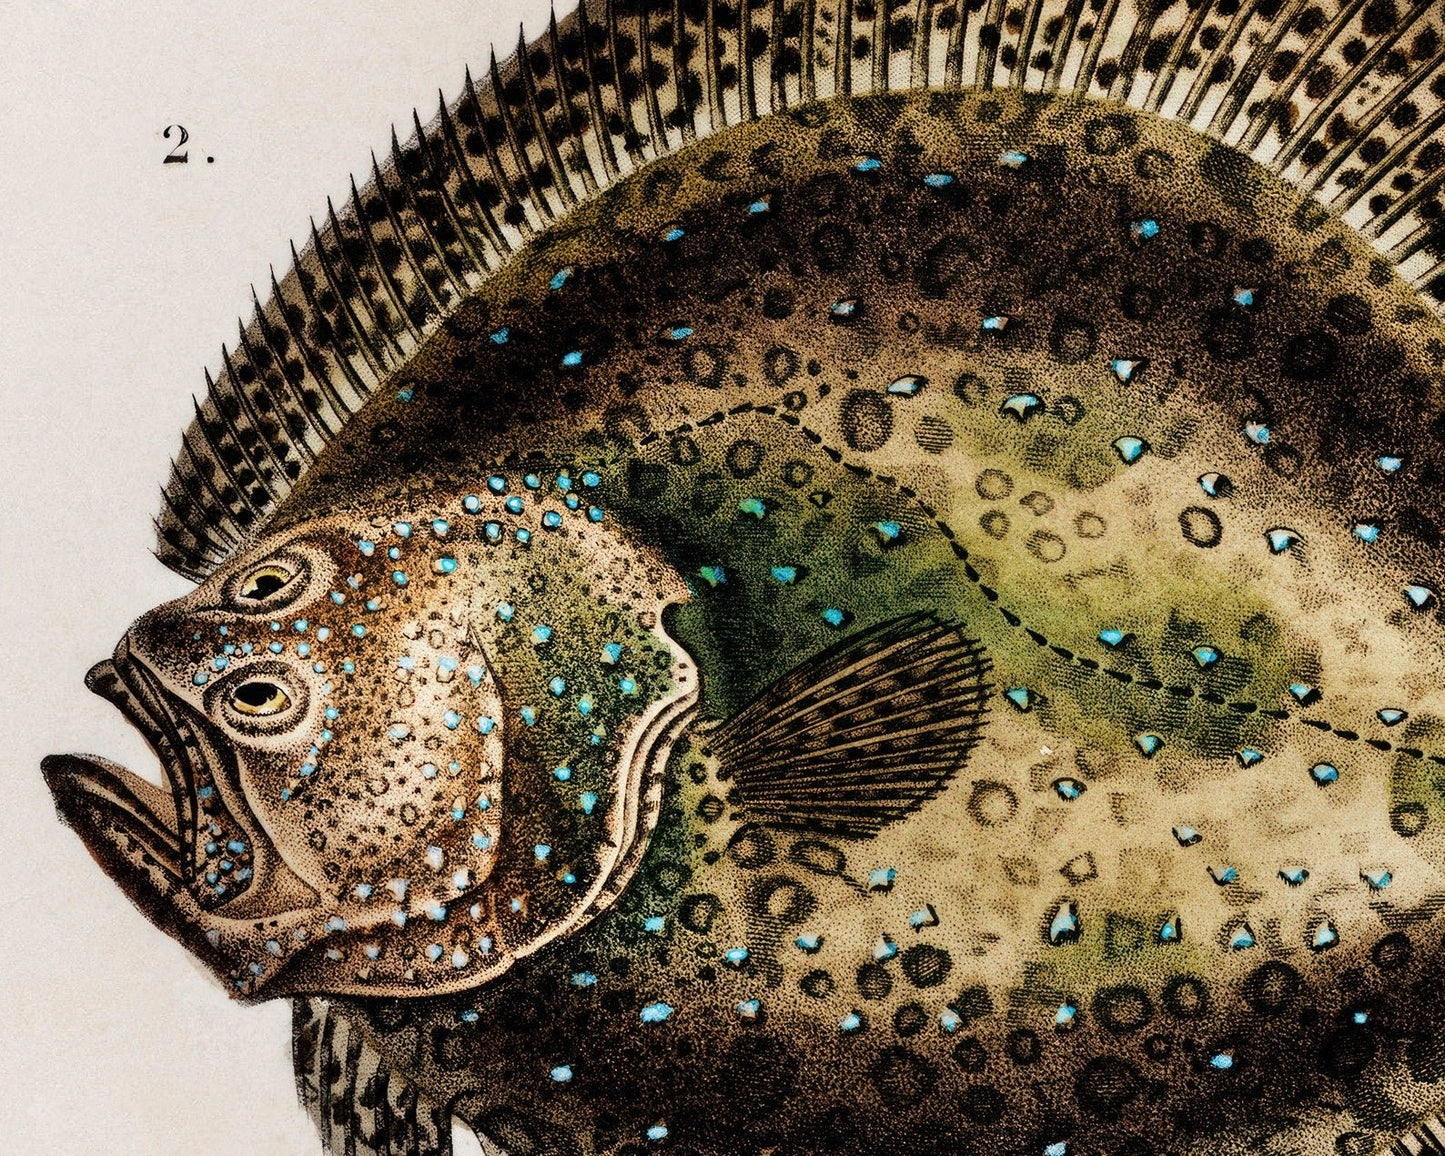 Vintage Nature Illustration "European Eel & Flounder" (c.1841) Charles d' Orbigny - Mabon Gallery